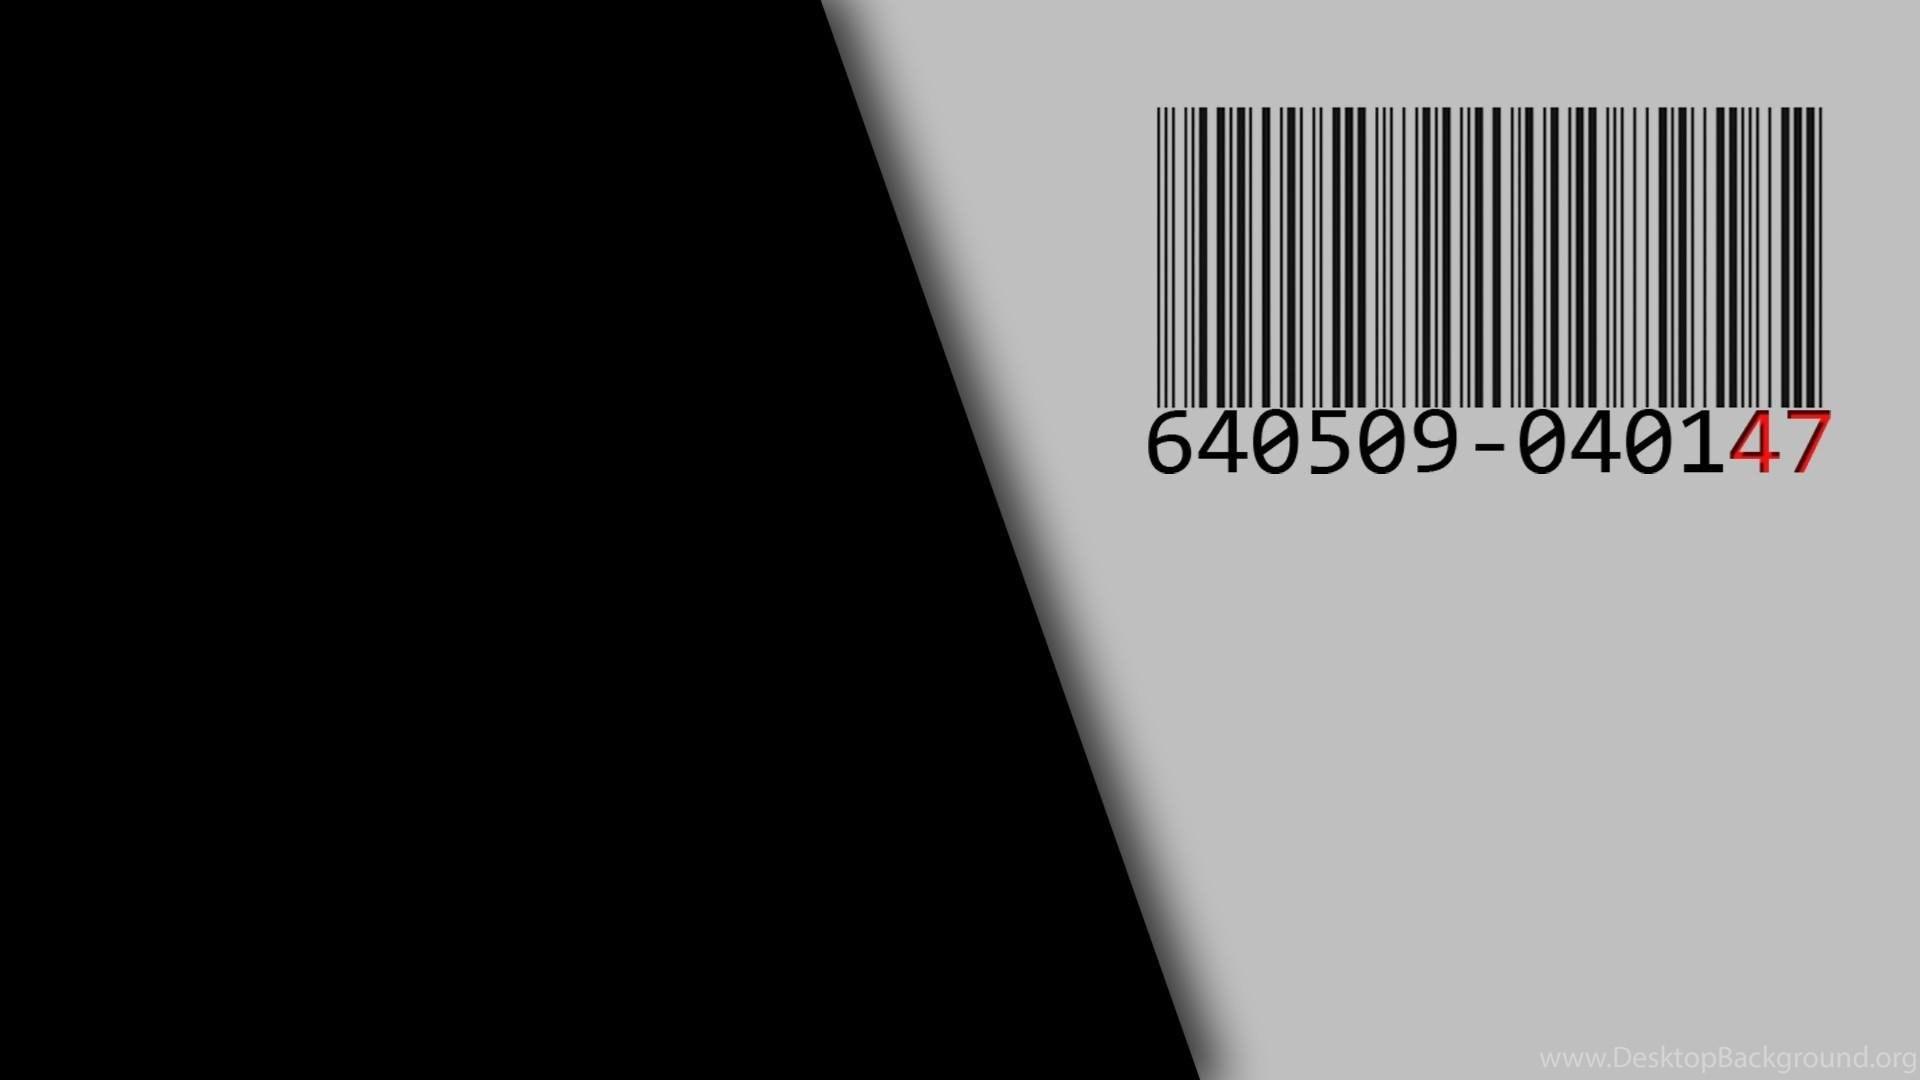 hitman barcode wallpaper